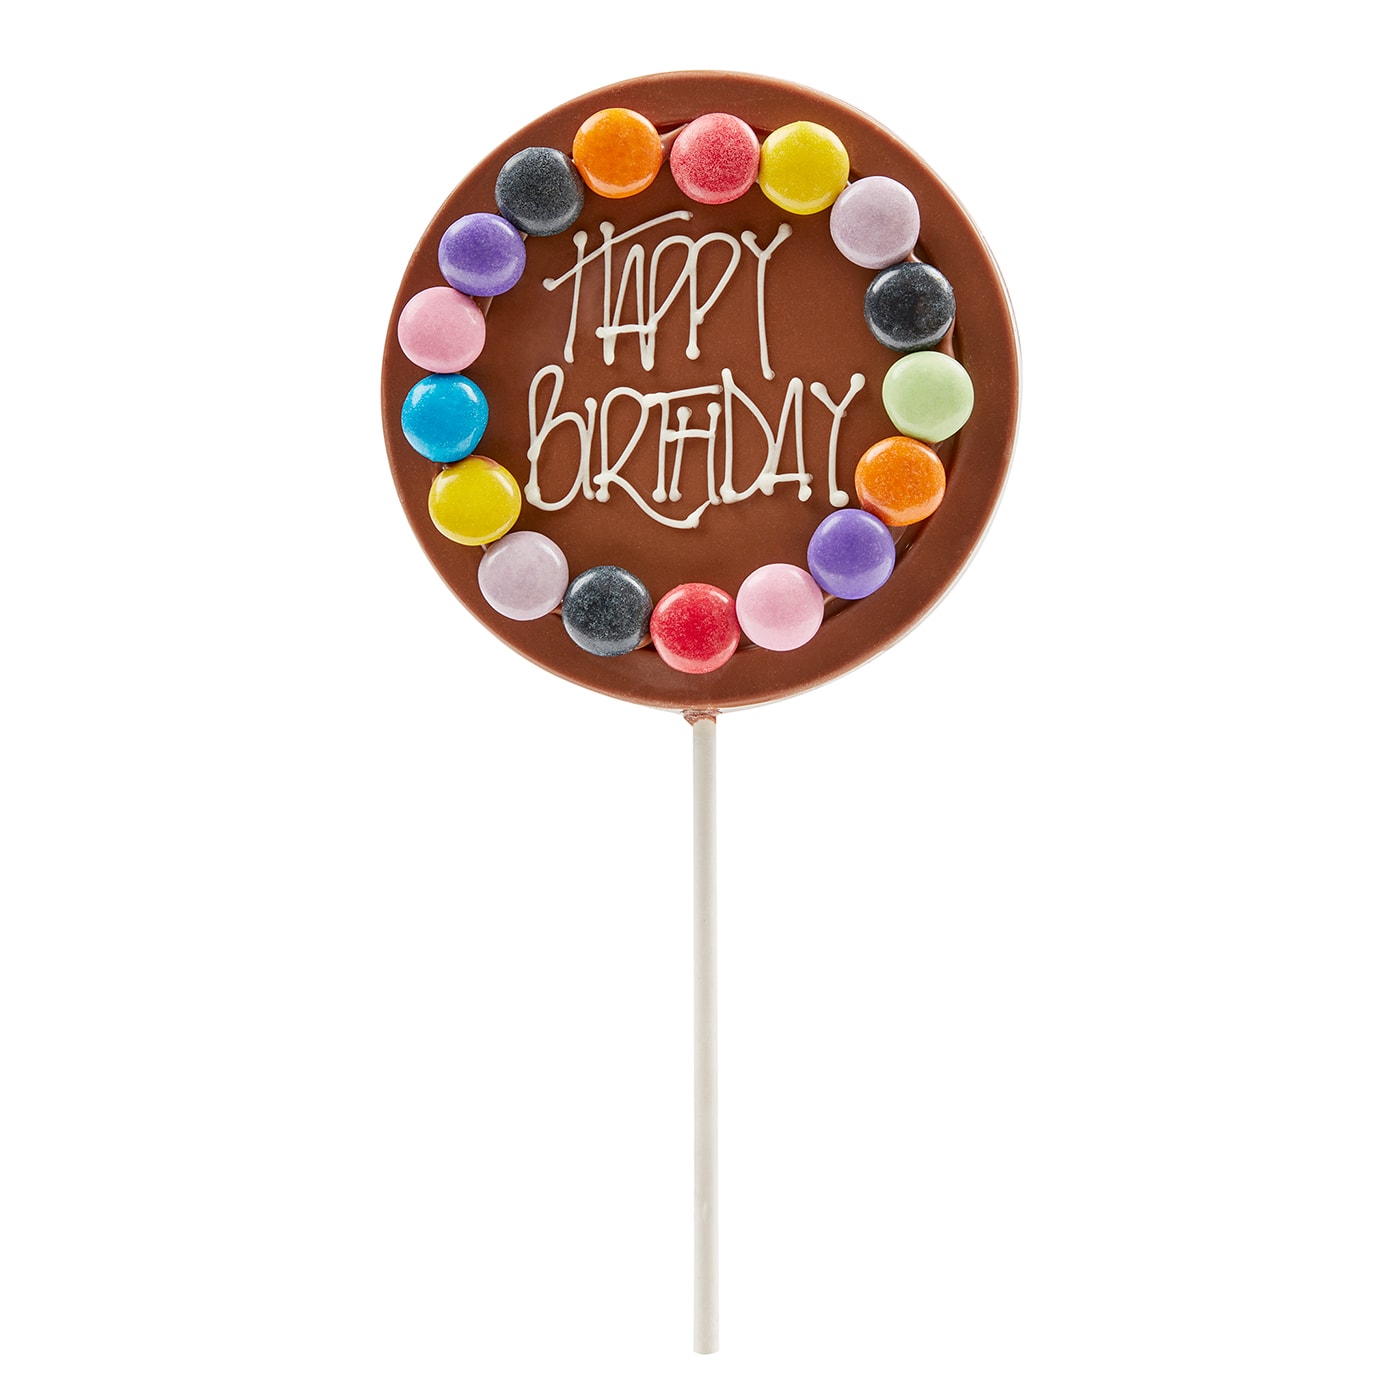 Happy Birthday milk chocolate lollipops with coloured smarties. Handmade in Melbourne.